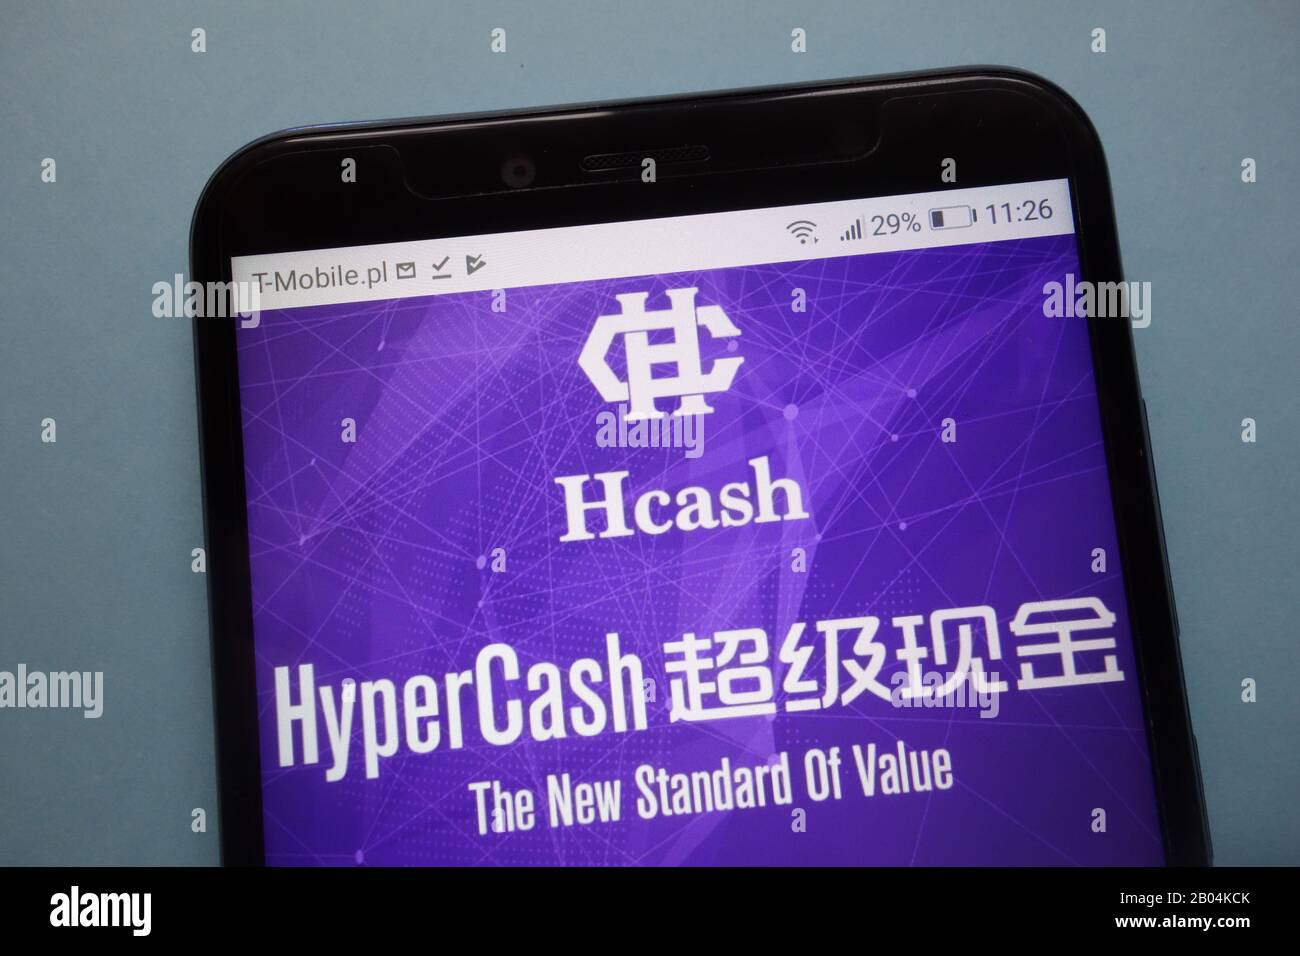 Hcash (HSR) cryptocurrency logo displayed on smartphone Stock Photo